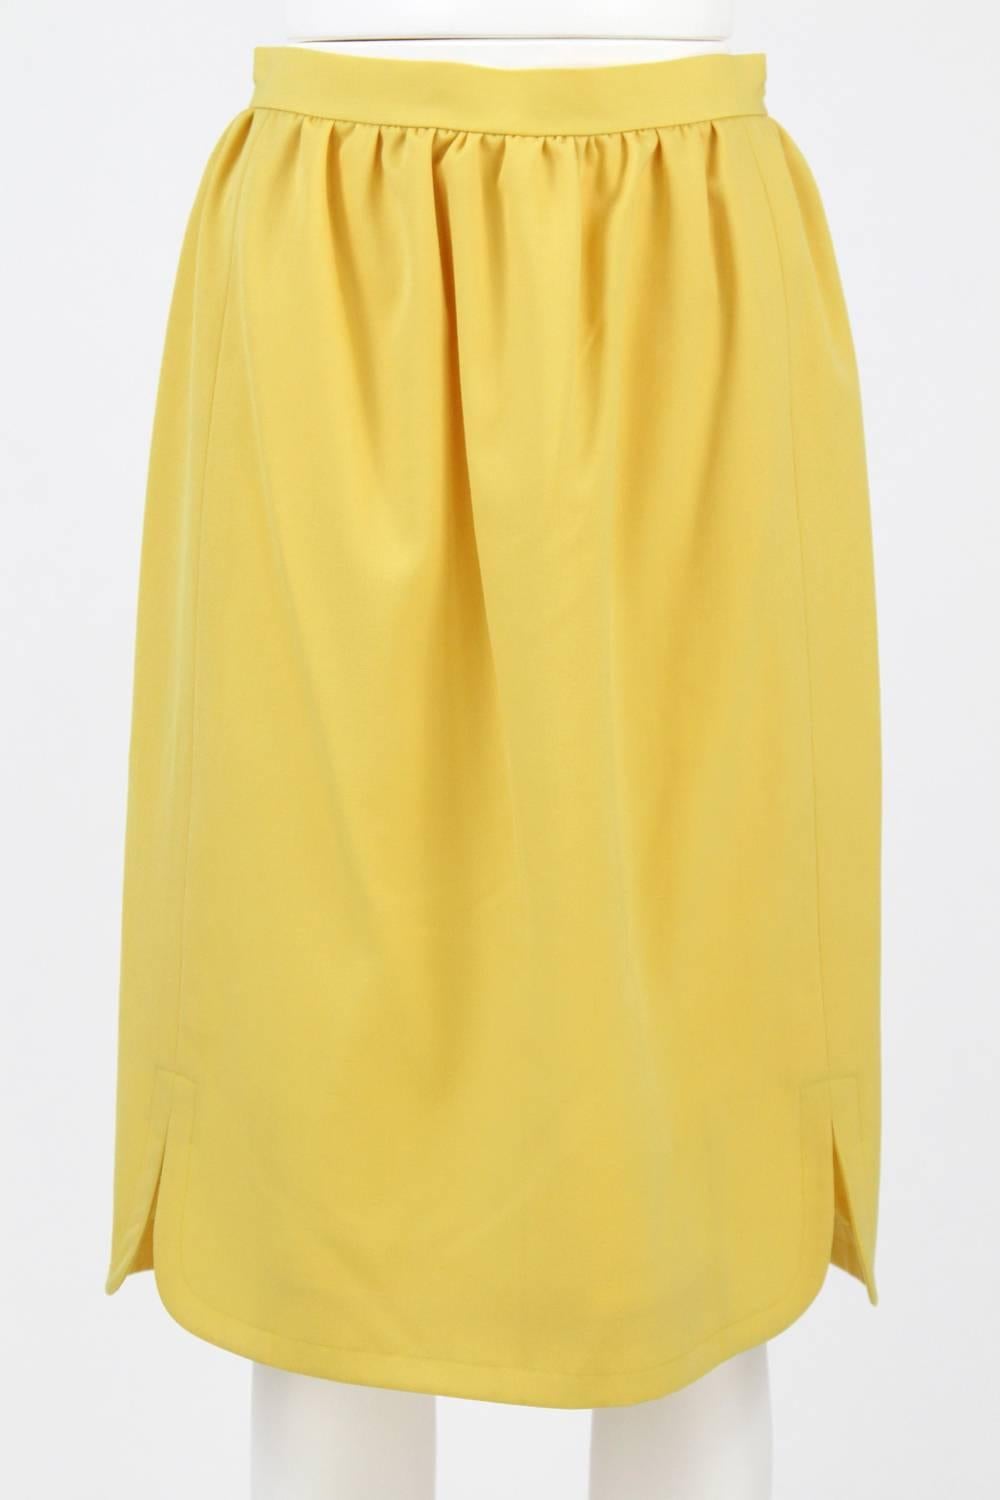 1980s Balenciaga Les Dix Yellow Wool Skirt Suit 3